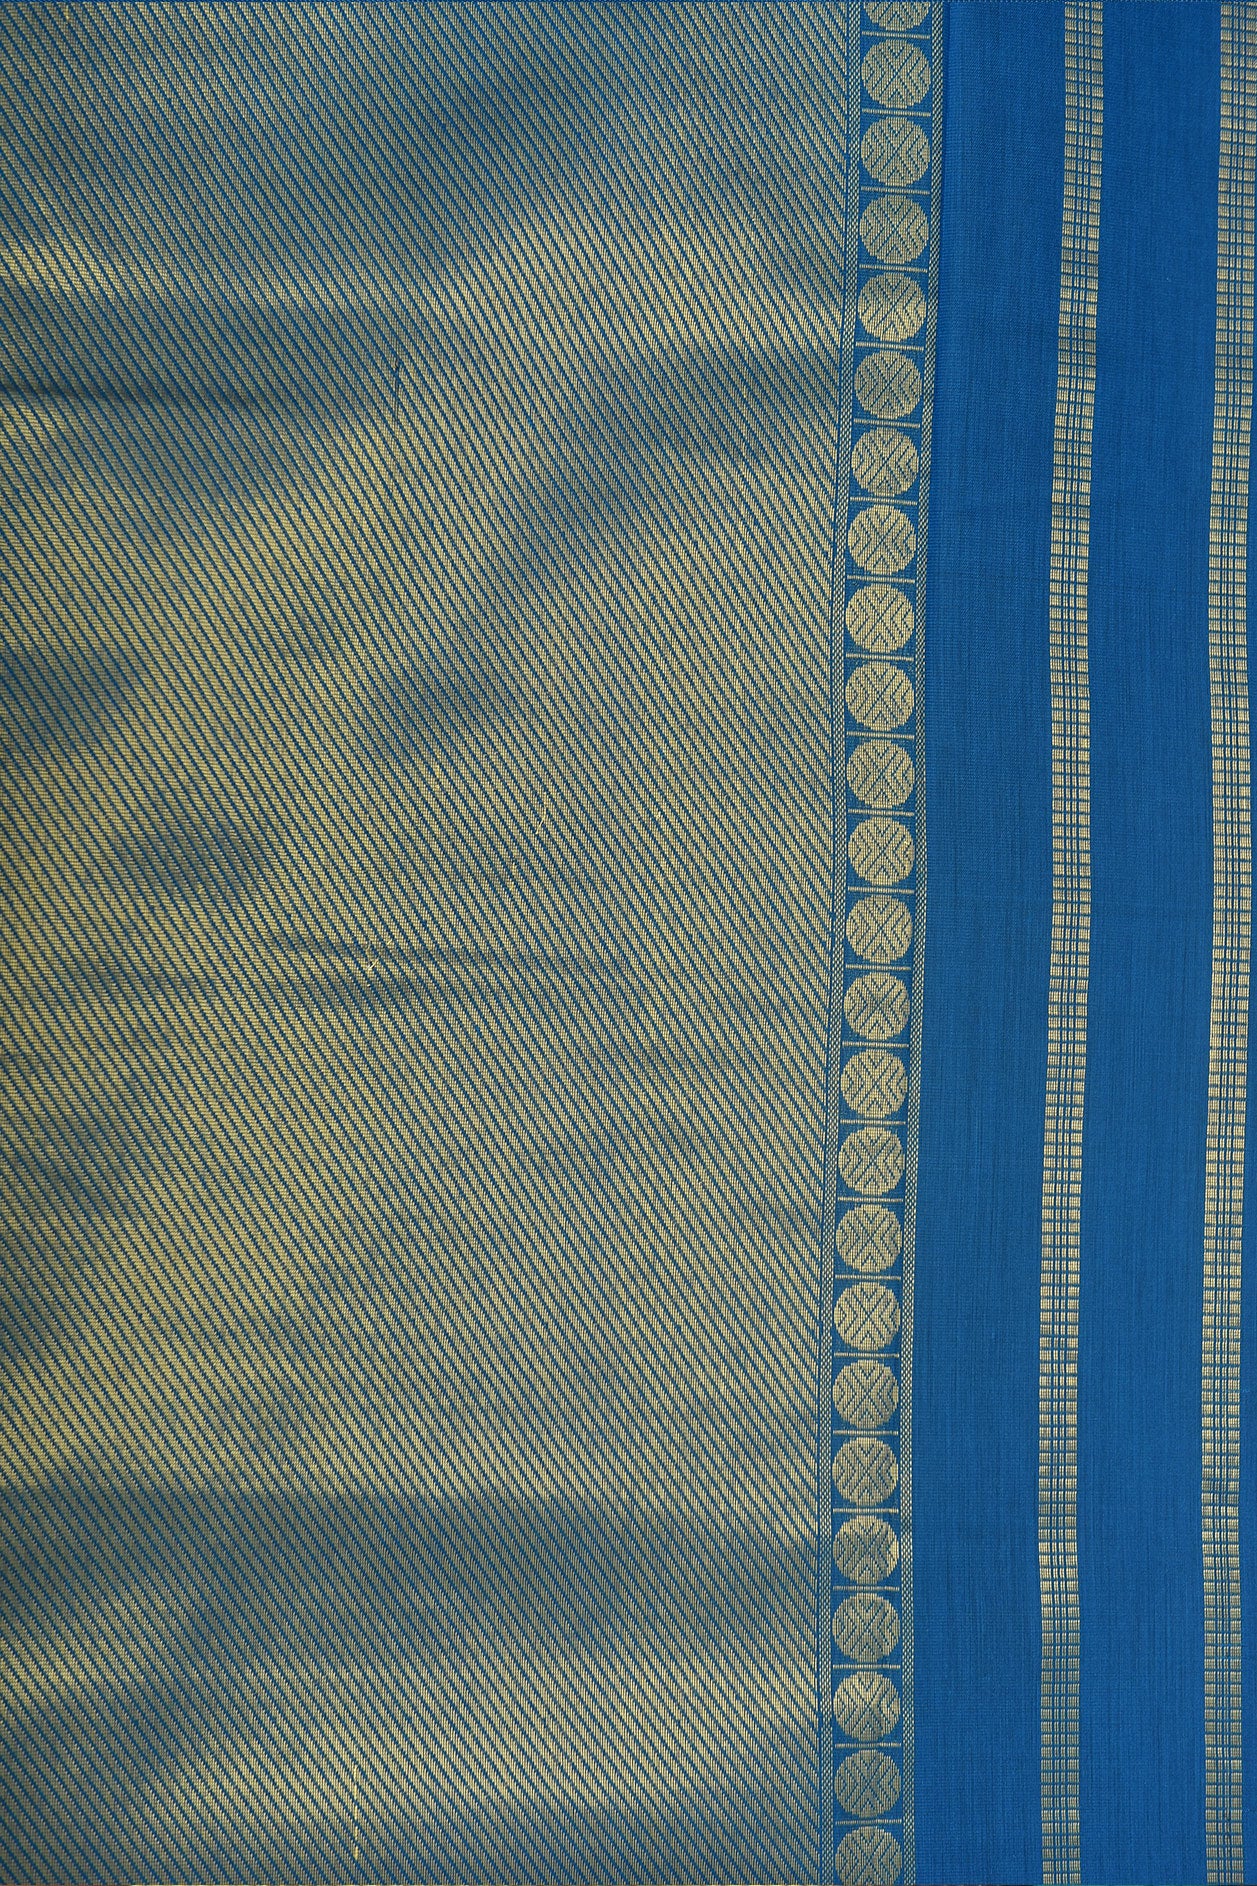 Zari Border With Veldhari Stripes Peacock Blue Apoorva Nine Yards Cotton Saree